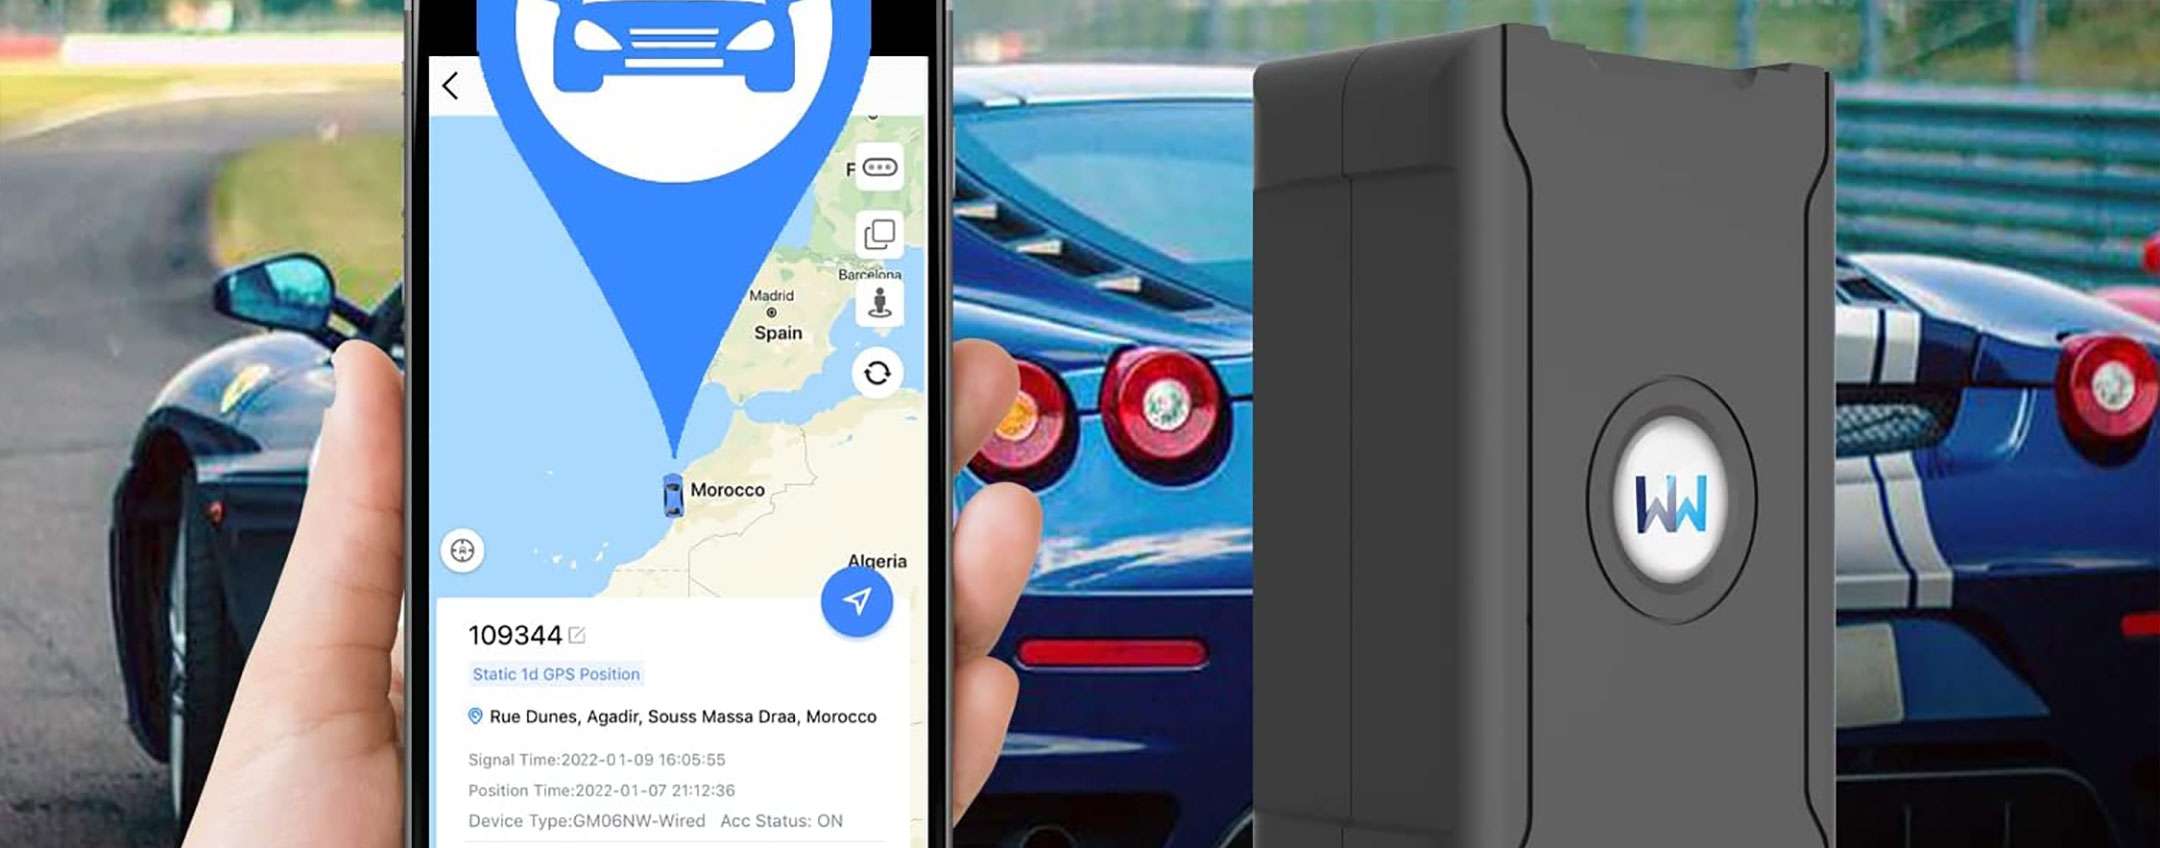 сменяем вися закачлив Localizzatore GPS per auto a 3 euro su Amazon: ORA